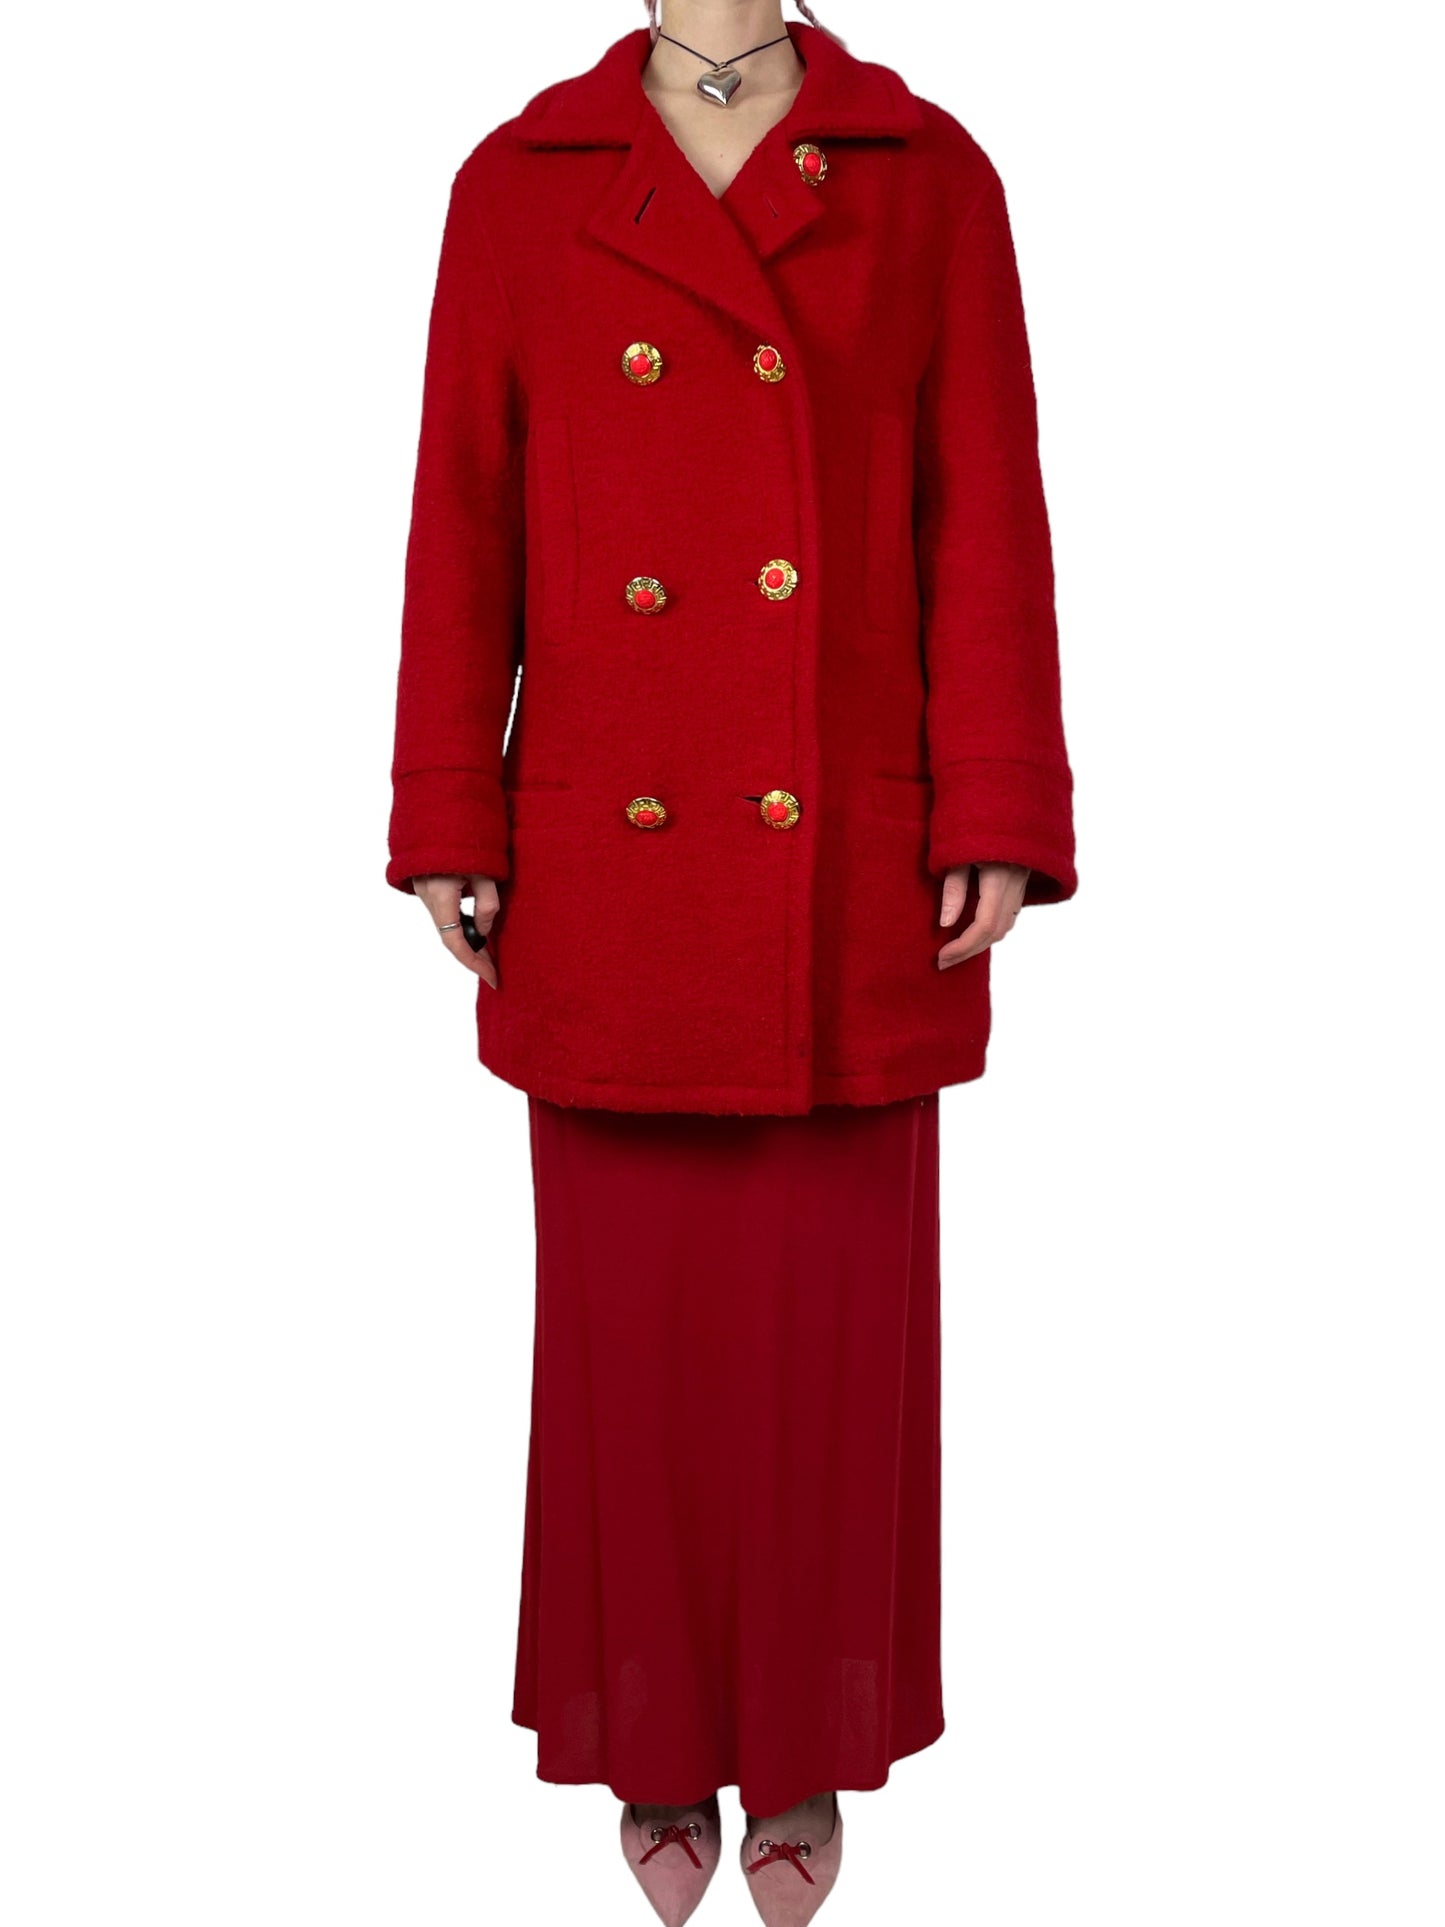 Versace c.1994 red boucle coat